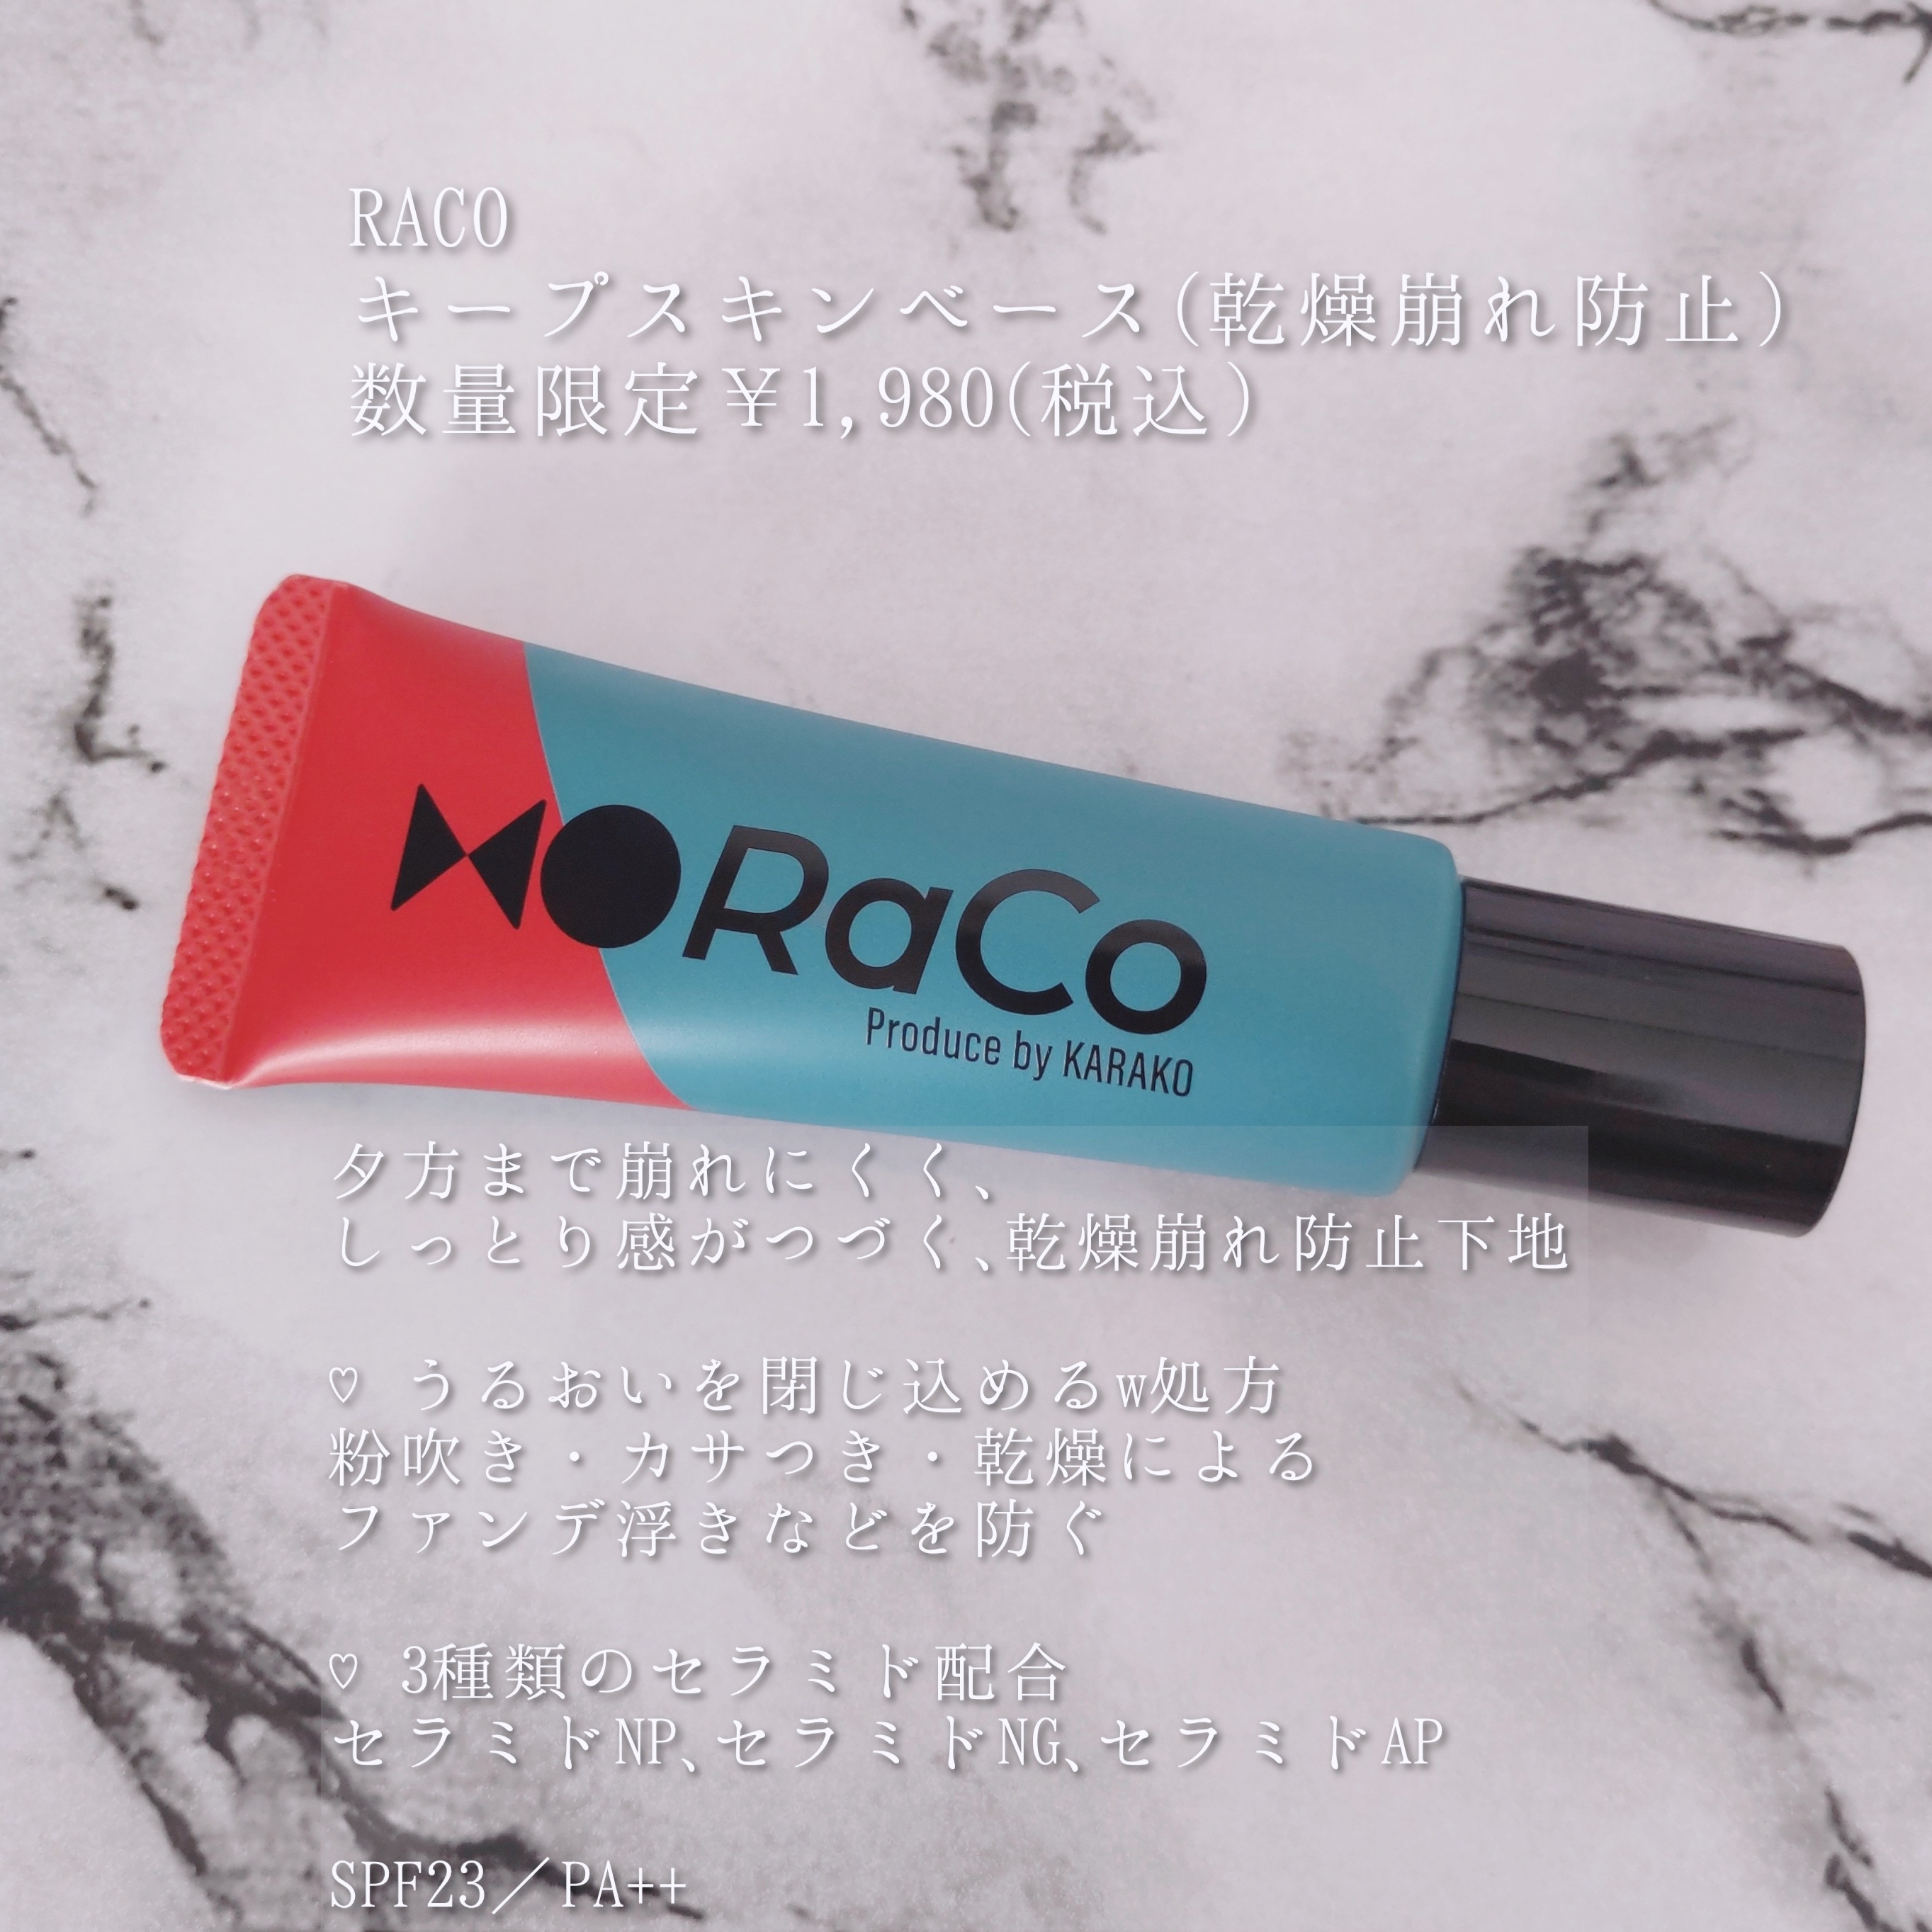 RACO キープスキンベース　(乾燥崩れ防止)を使ったYuKaRi♡さんのクチコミ画像3